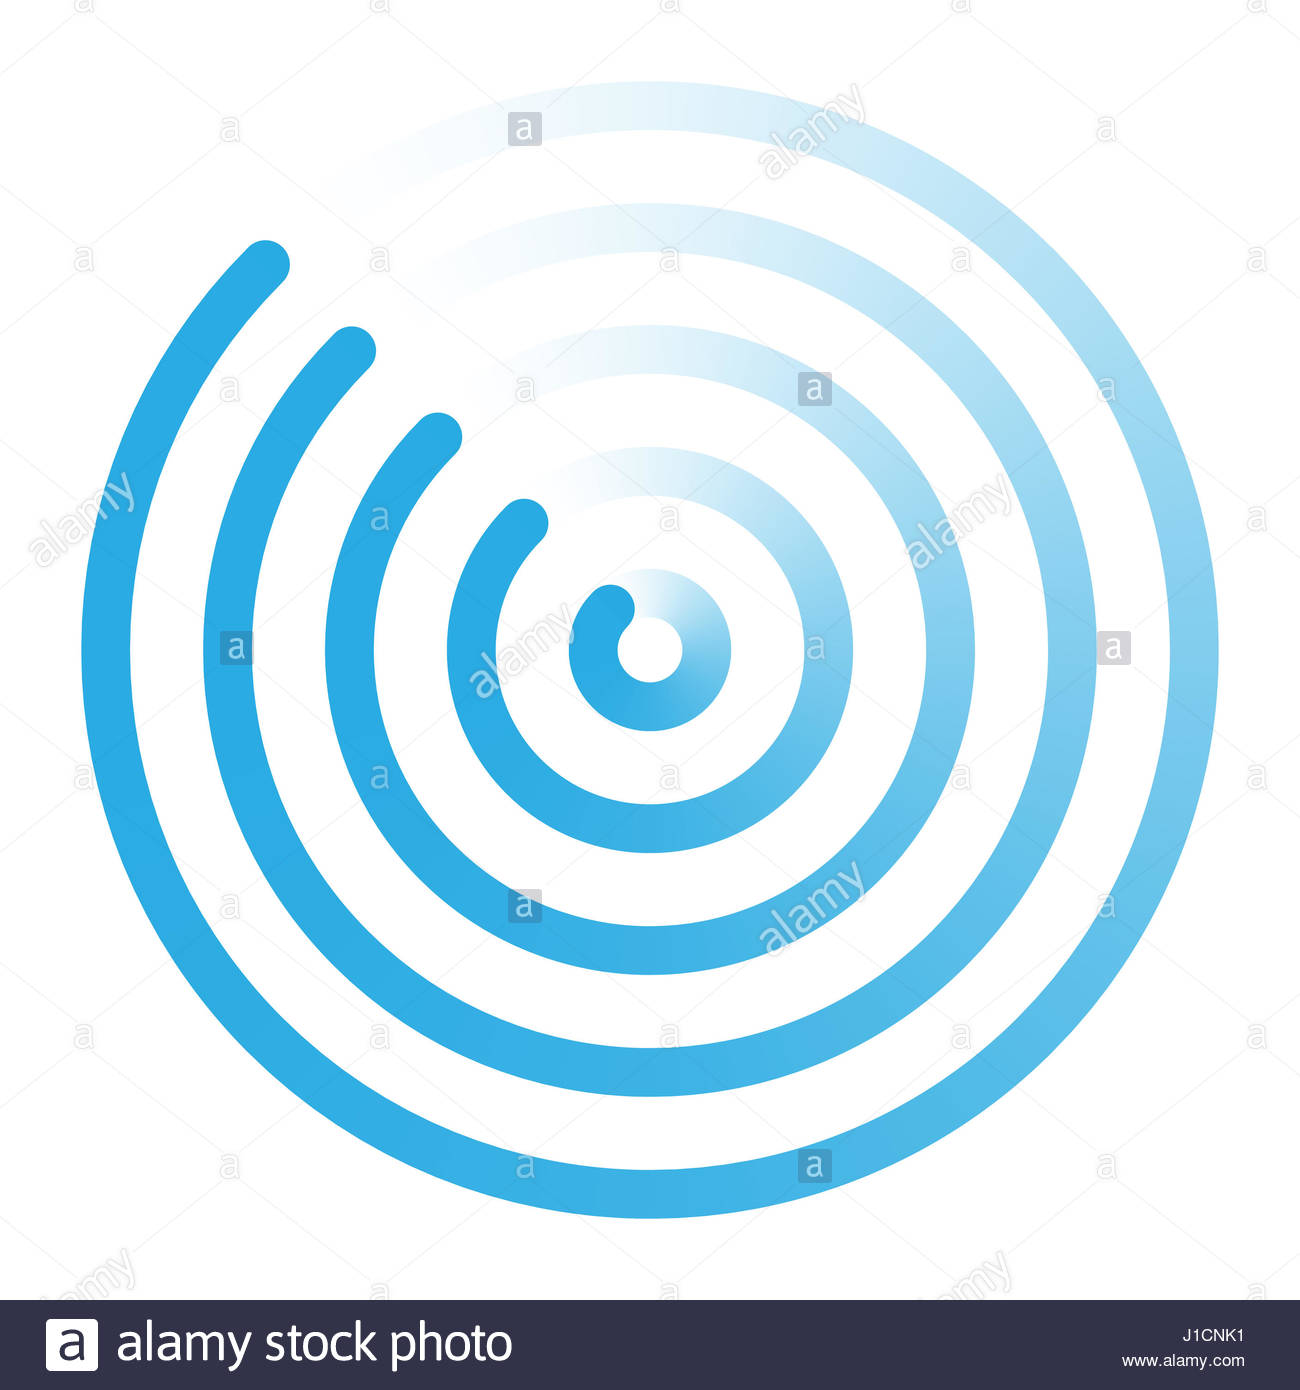 Radar icons | Noun Project